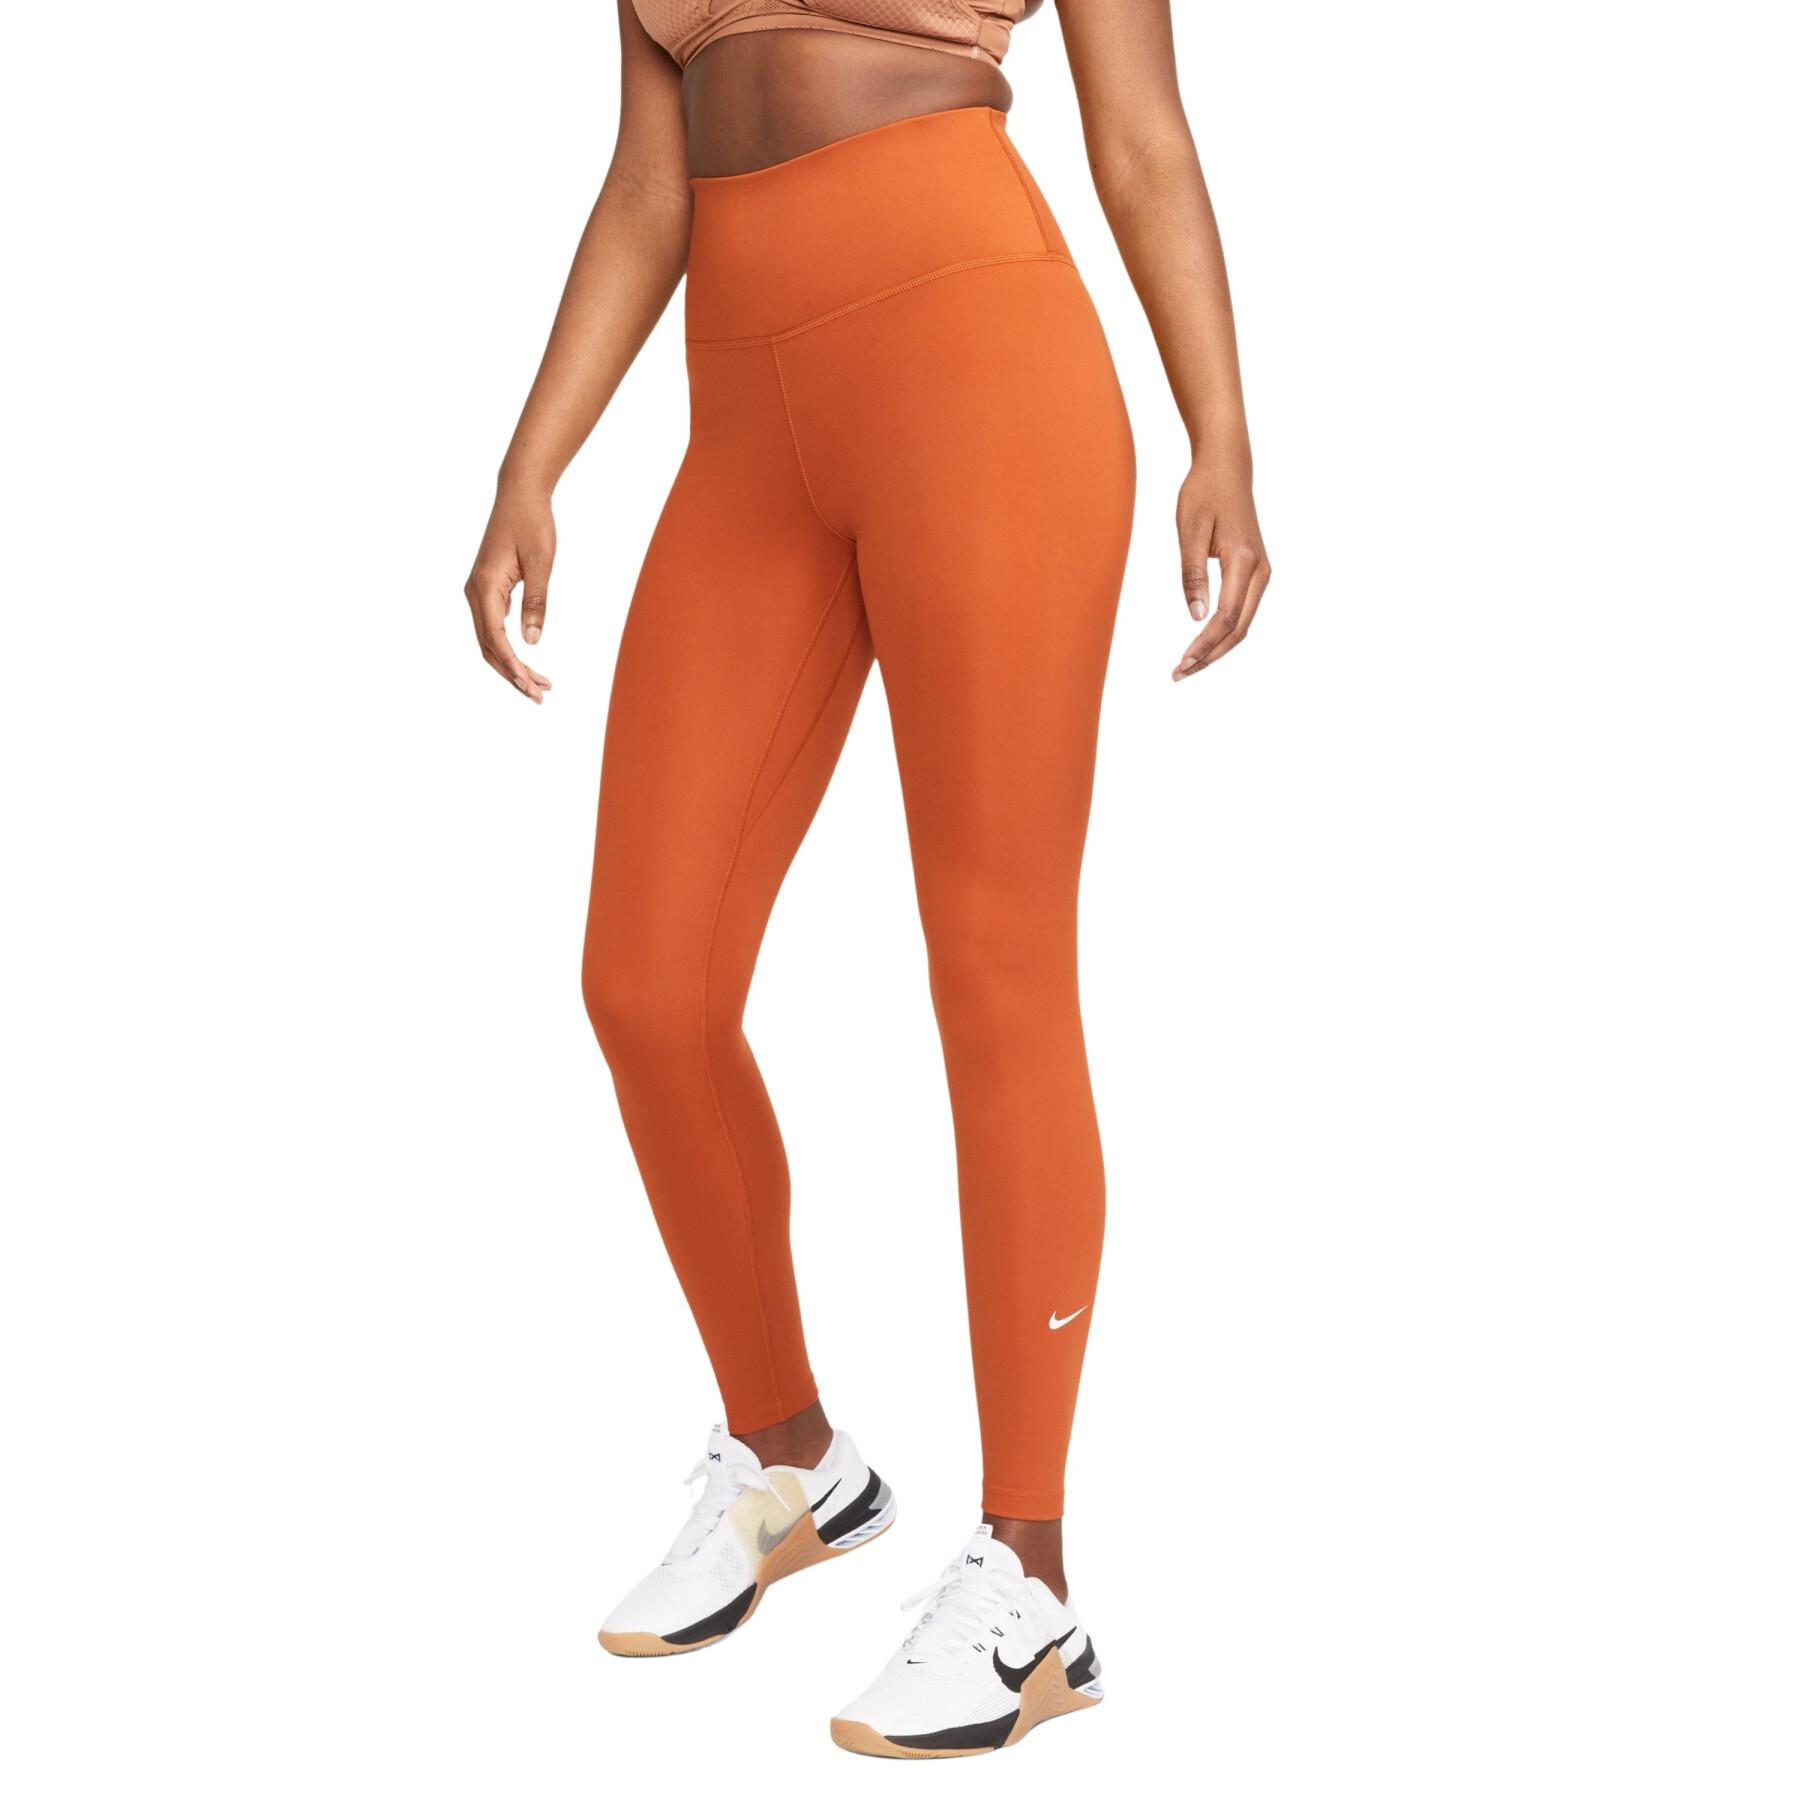 Legging high waist woman Nike One Dri-FIT - Baselayers - Women's wear -  Handball wear